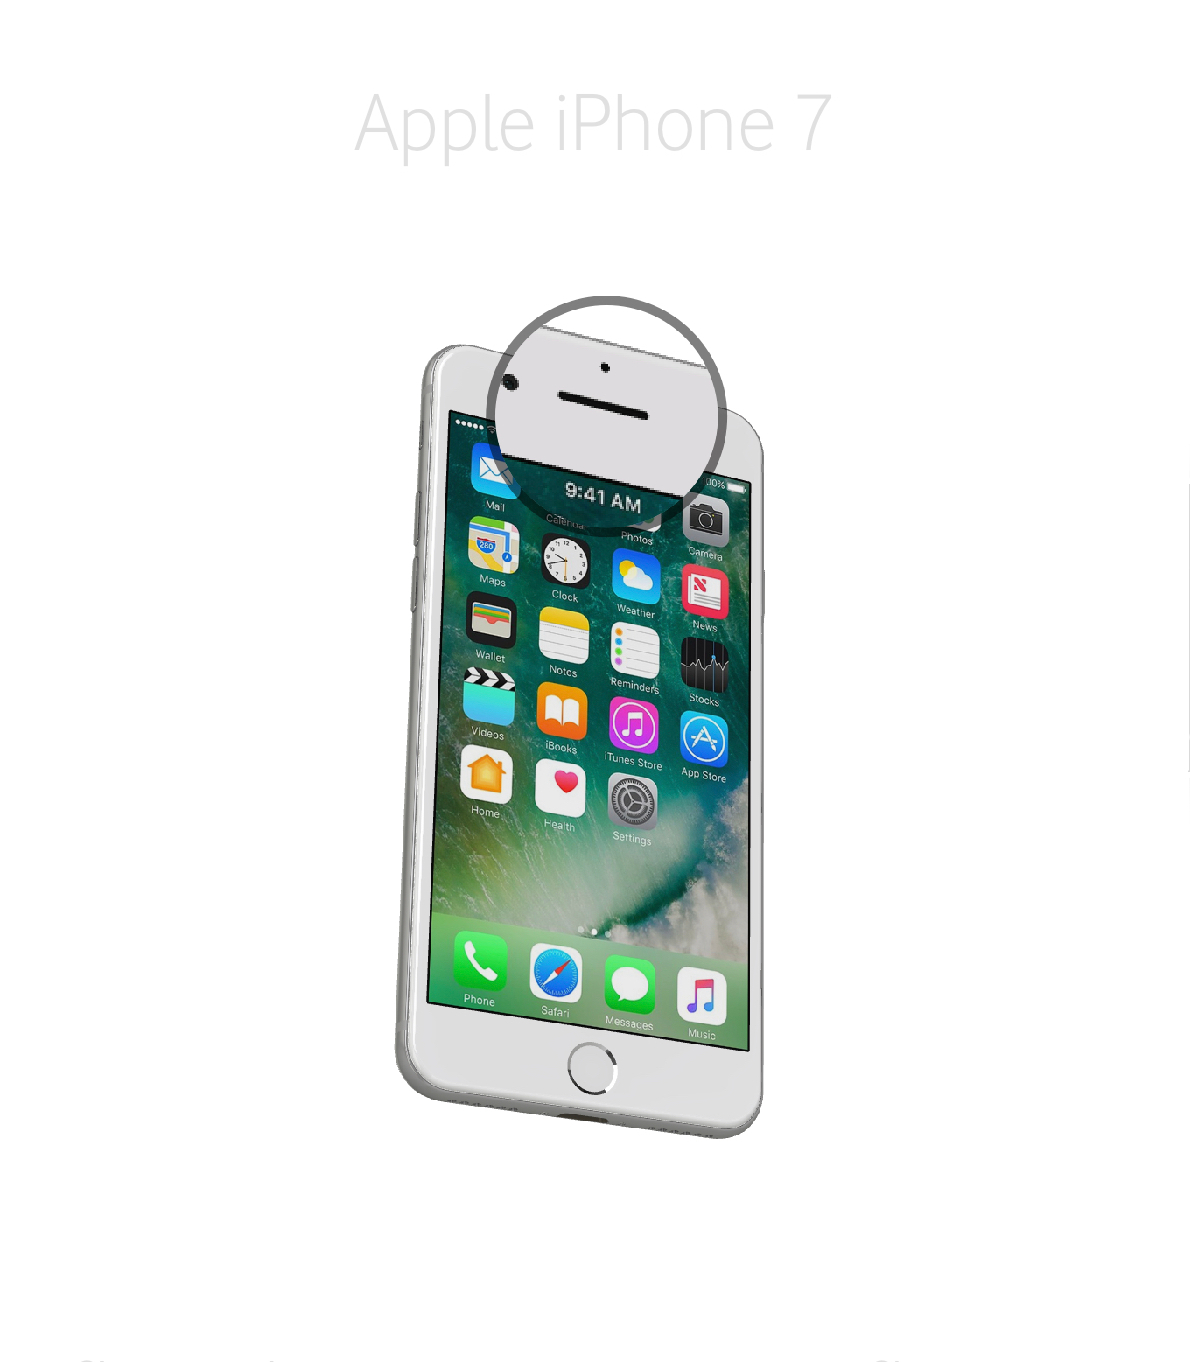 Laga samtalshögtalare iPhone 7